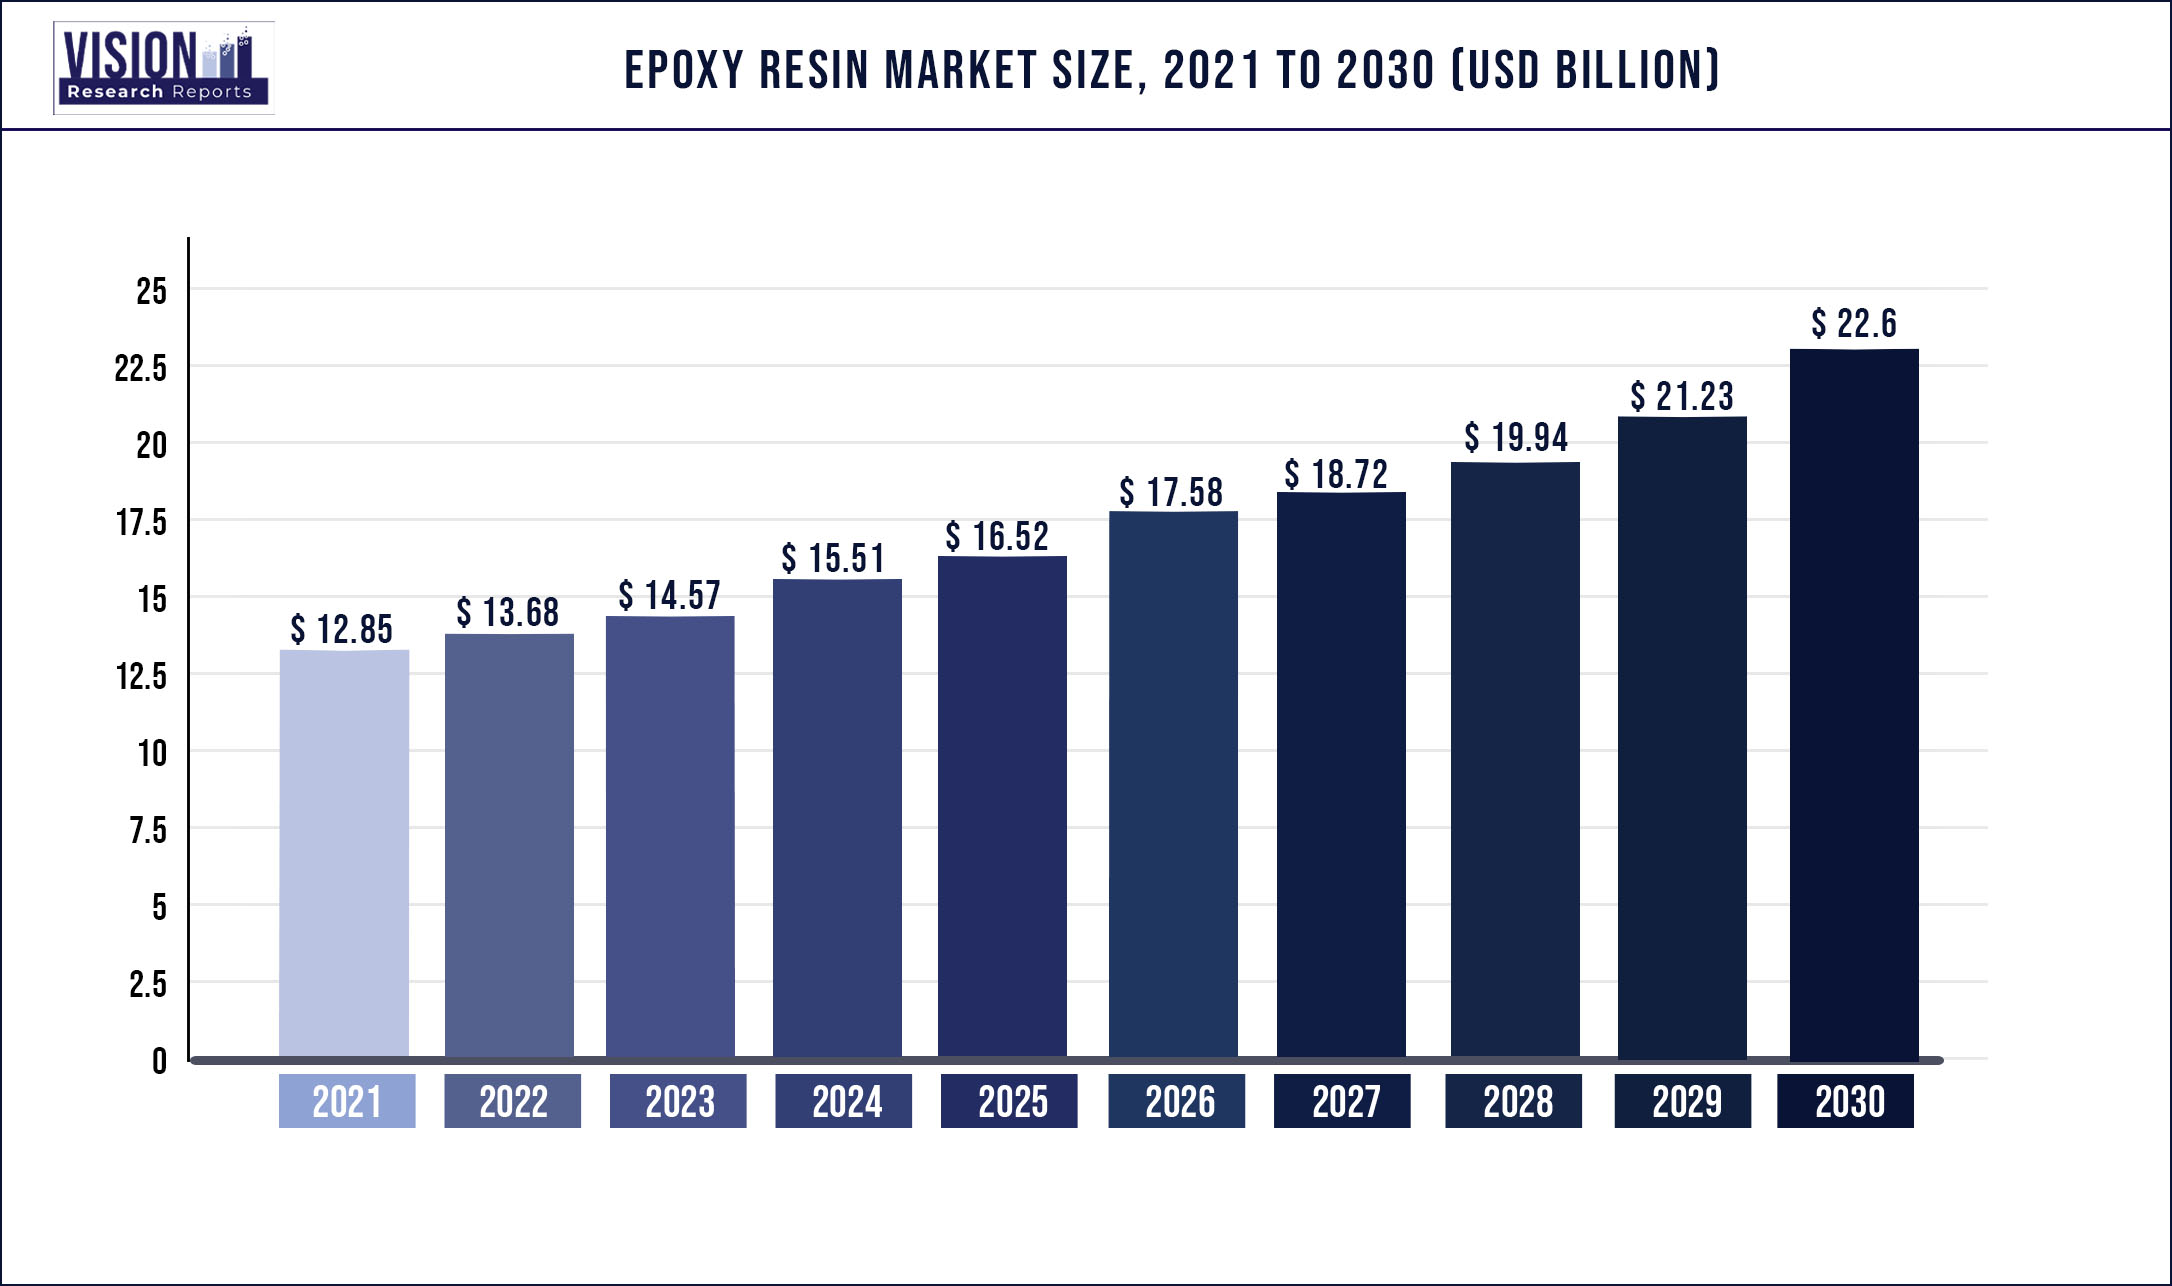 Epoxy Resin Market Size 2021 to 2030